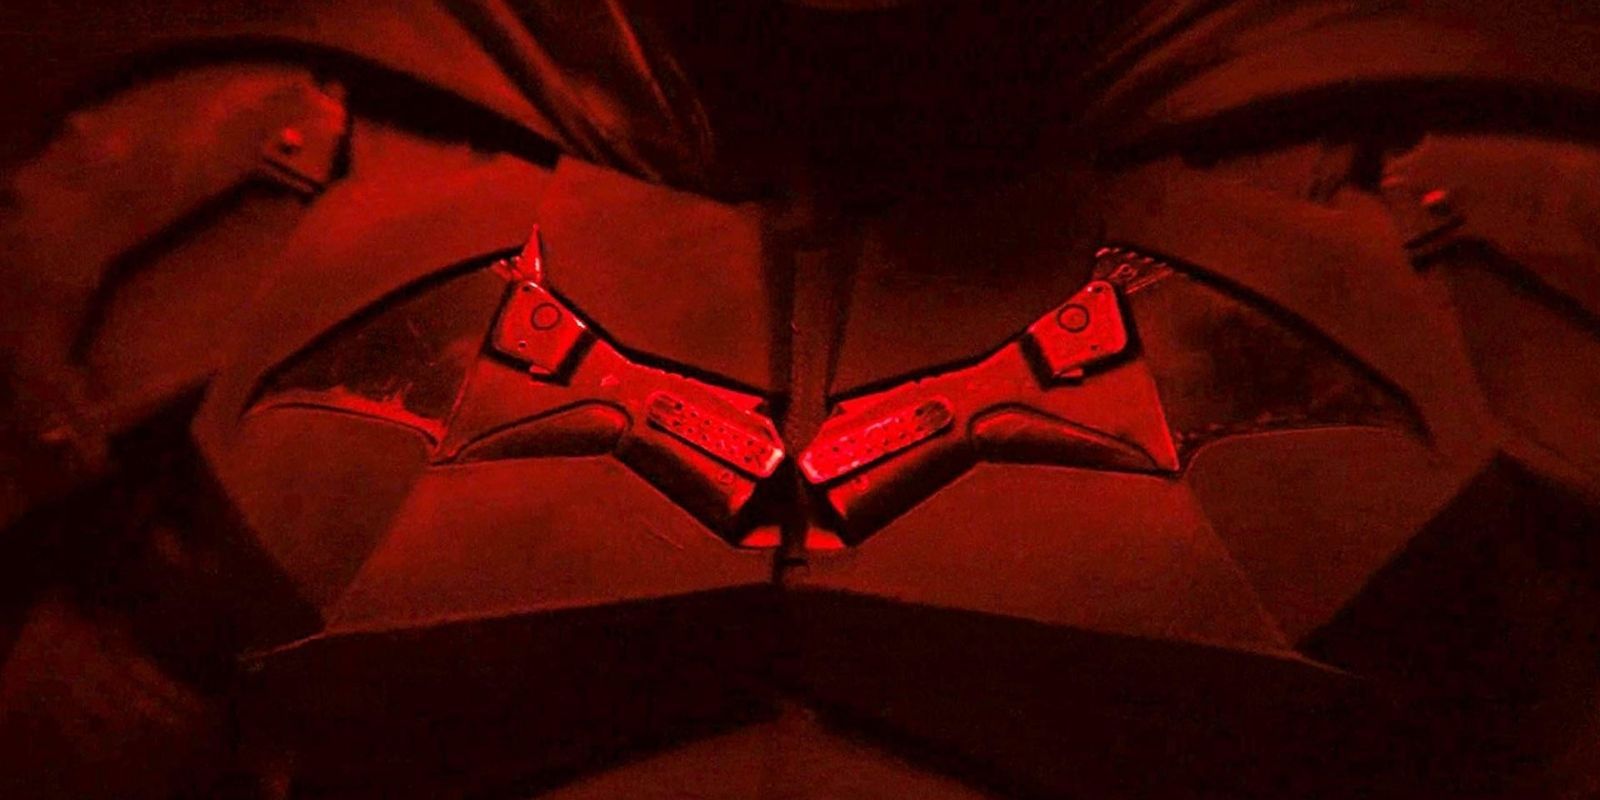 Batman's symbol, lit up in red